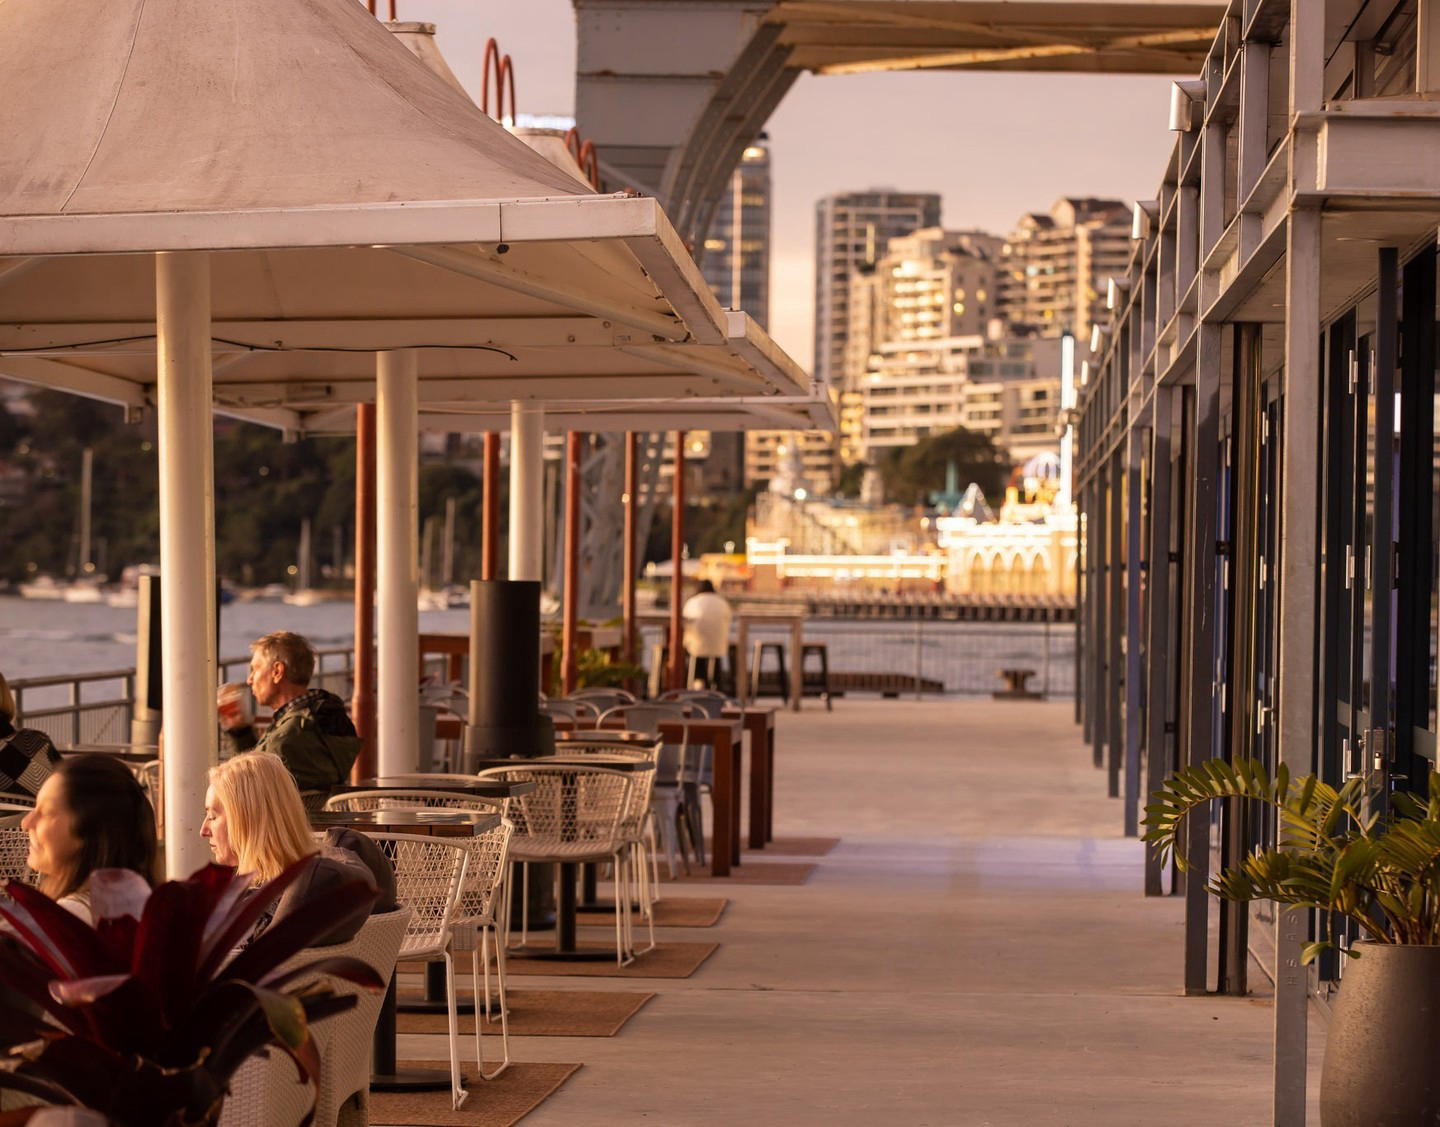 Pier One Sydney Harbour - Sunset stroll anyone